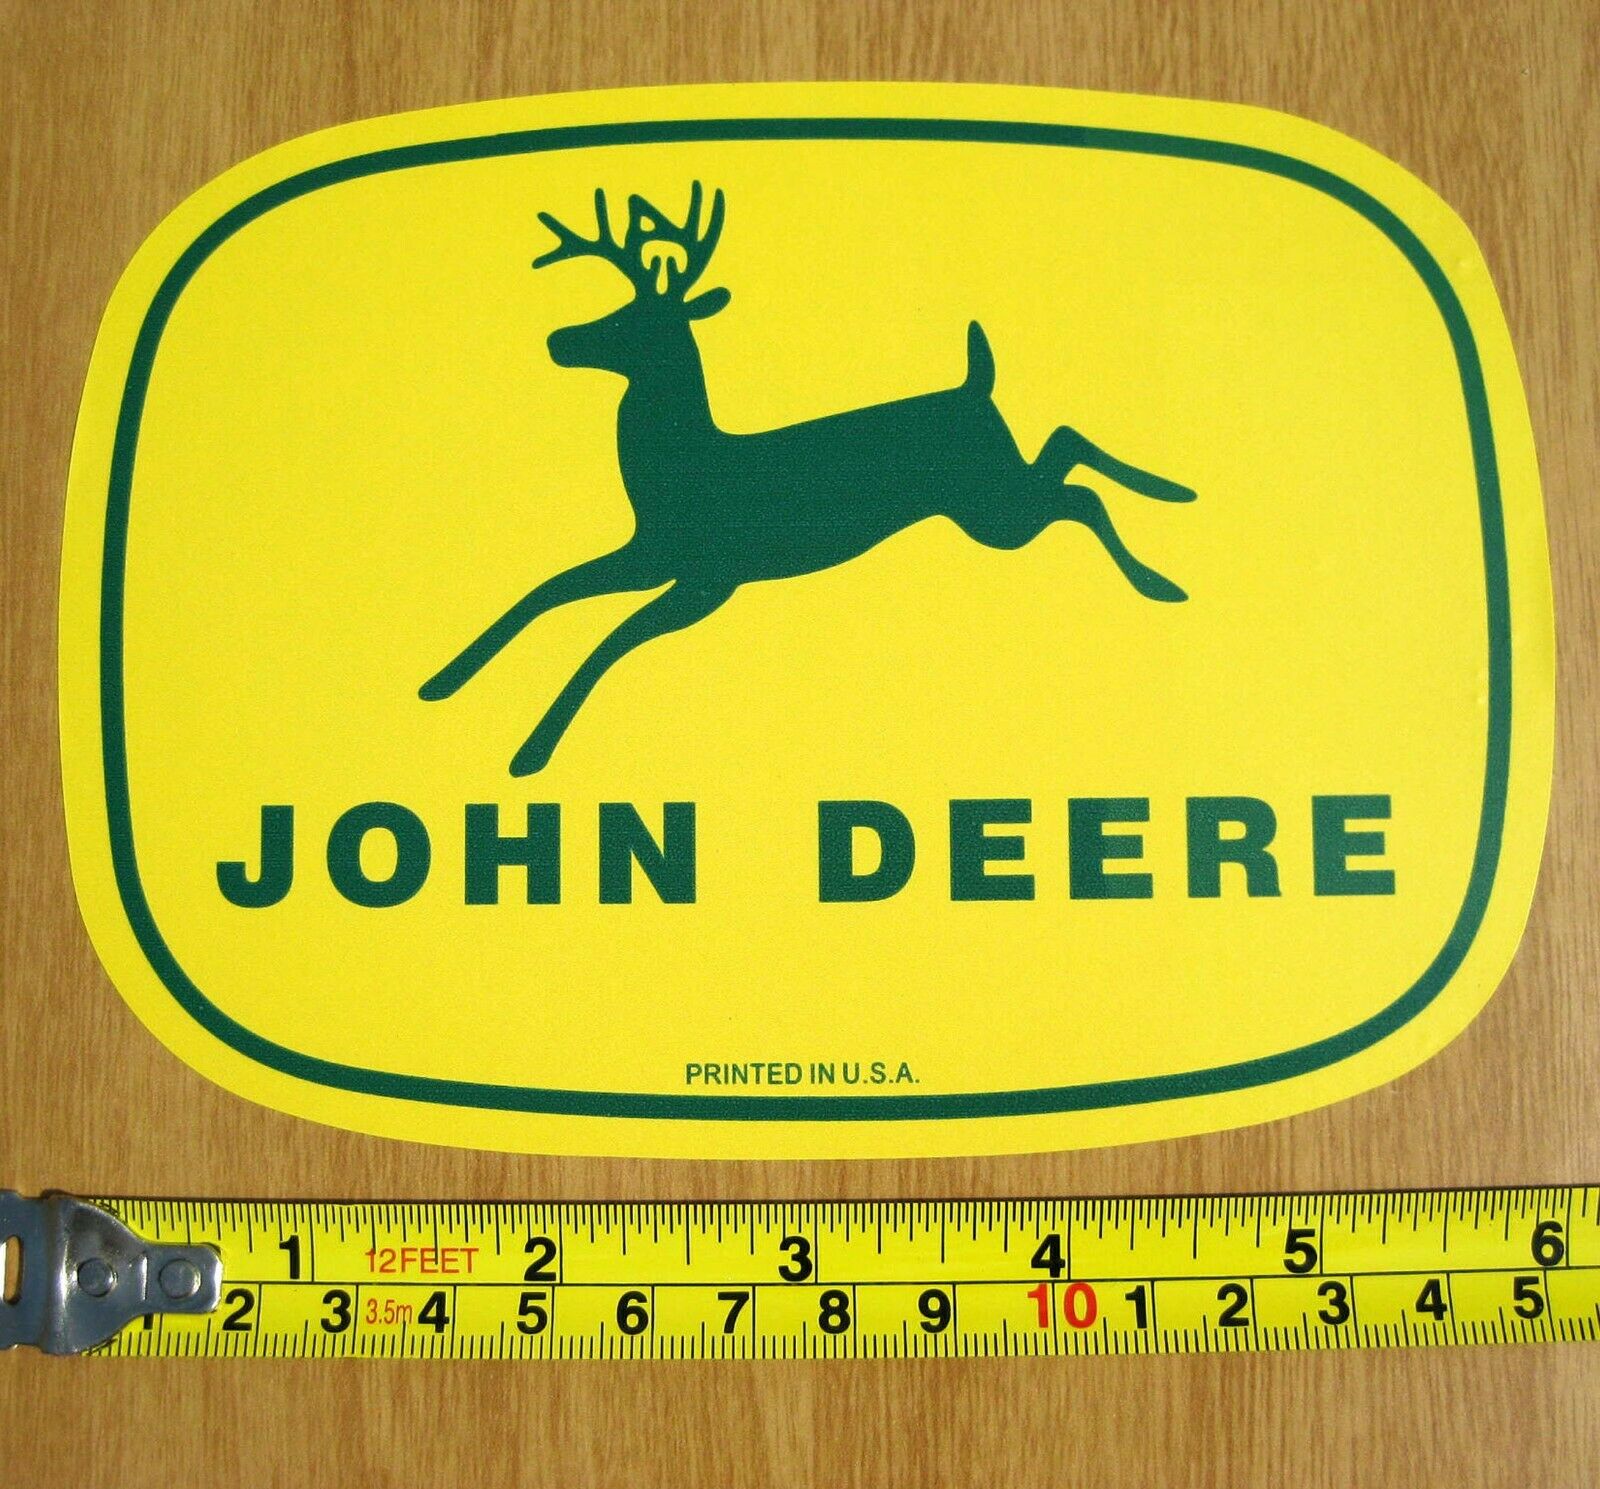 2 John Deere Classic 4 Leg Deer 5.75 X 4.5" Vinyl Decal Stickers & Free Us Flag